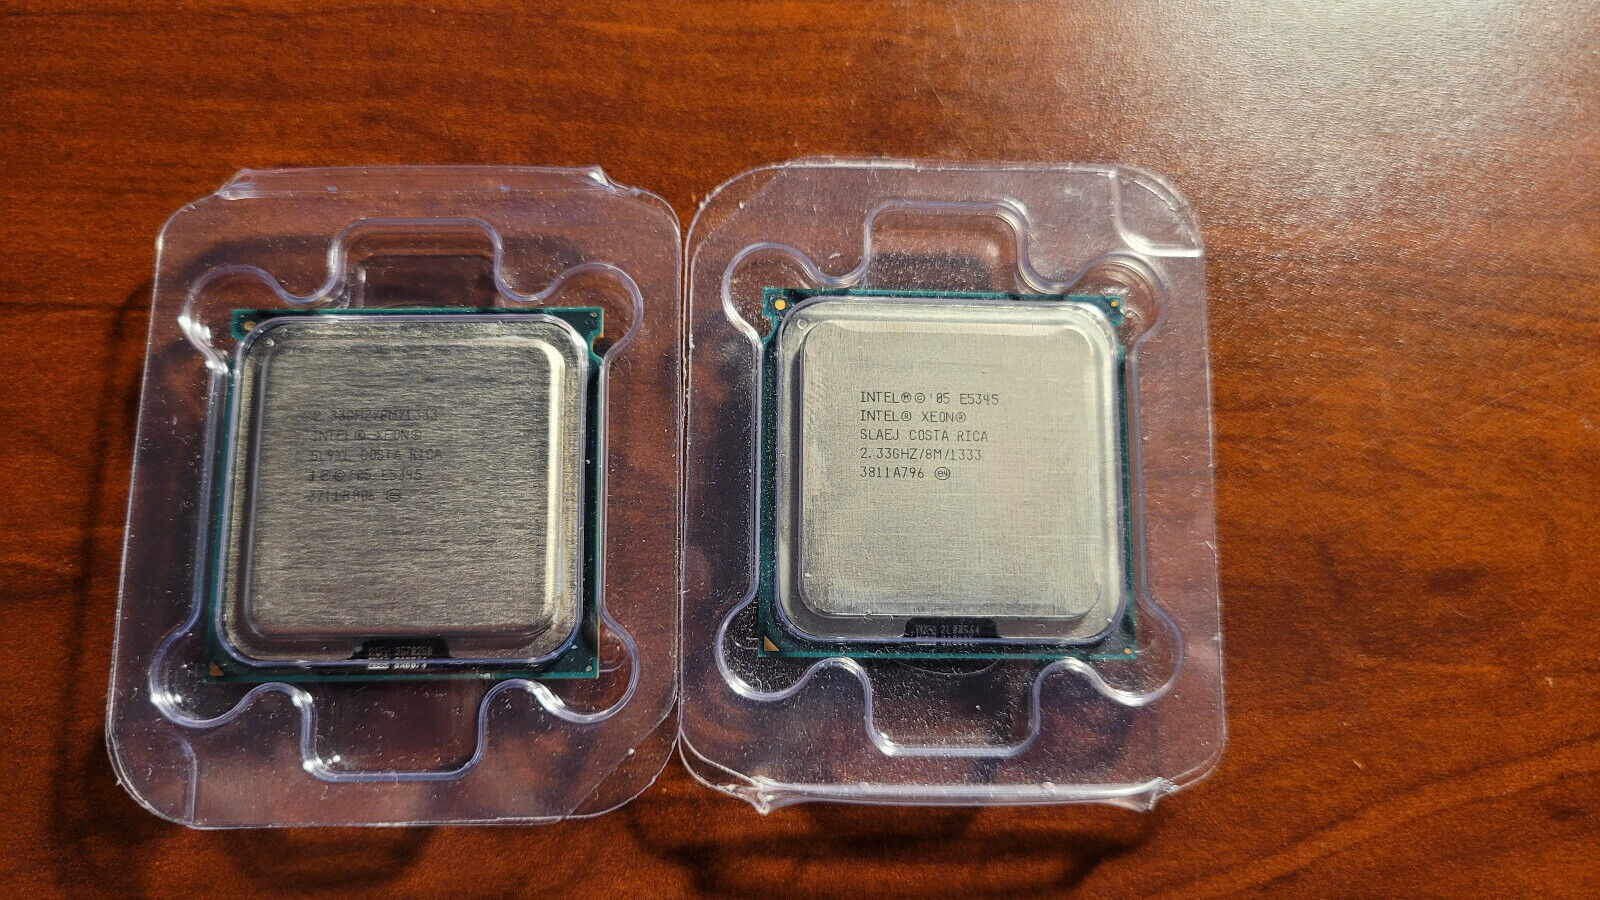 2x Pair of Intel Xeon E5345 2.33GHz Quad-Core (439827001) Processor